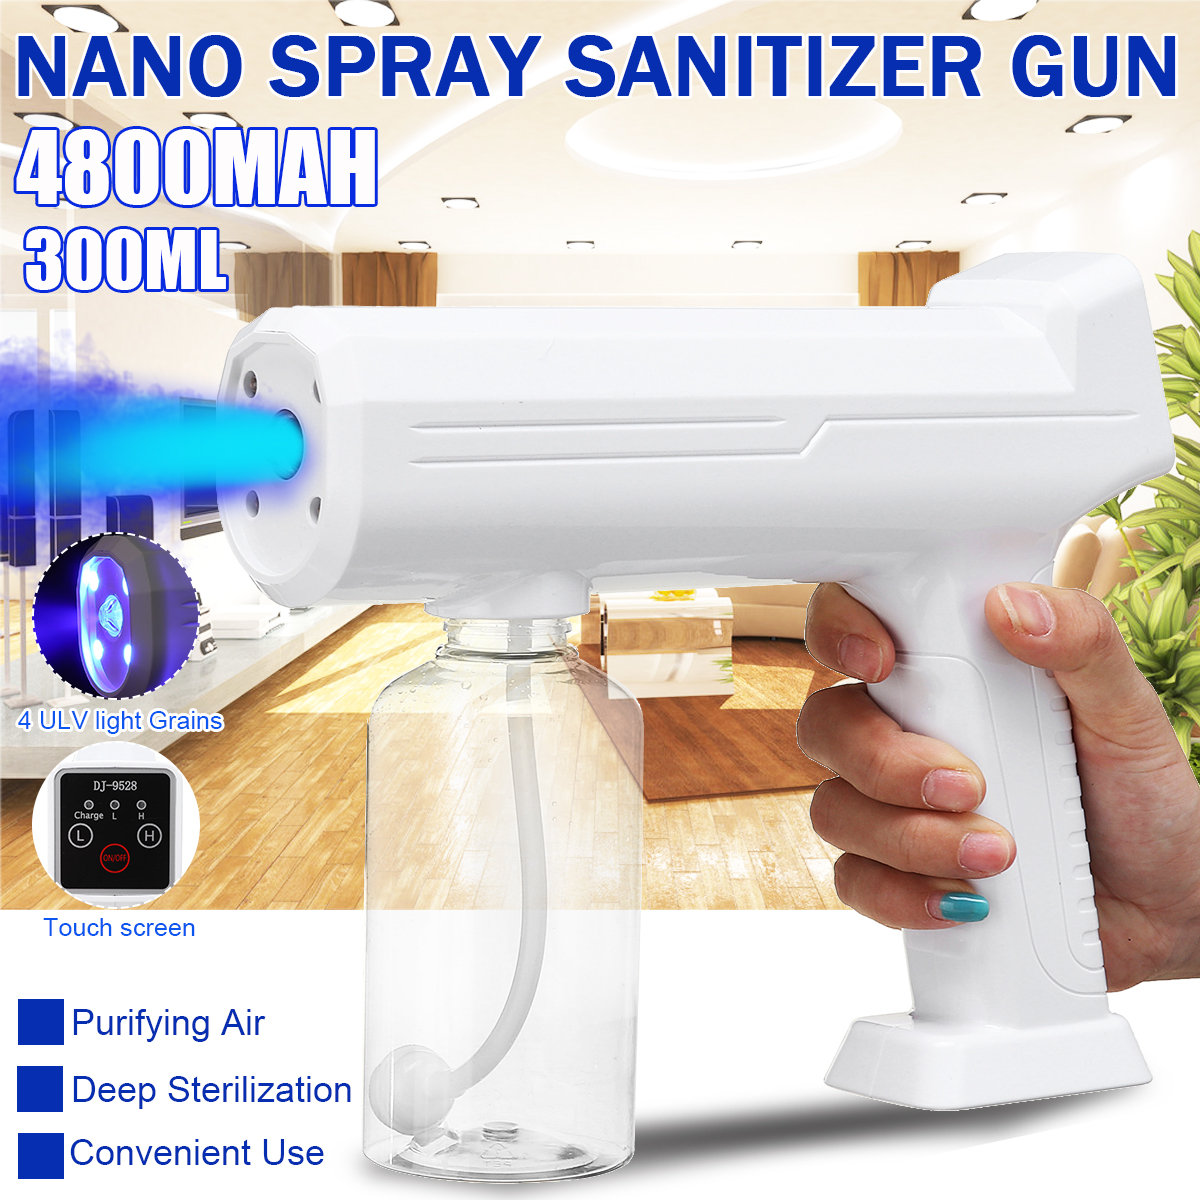 Electric-Spray-Guns-Spray-Machine-Wireless-Electric-Sanitizer-330ML-Sprayer-Disinfects-Blue-Light-St-1903062-1